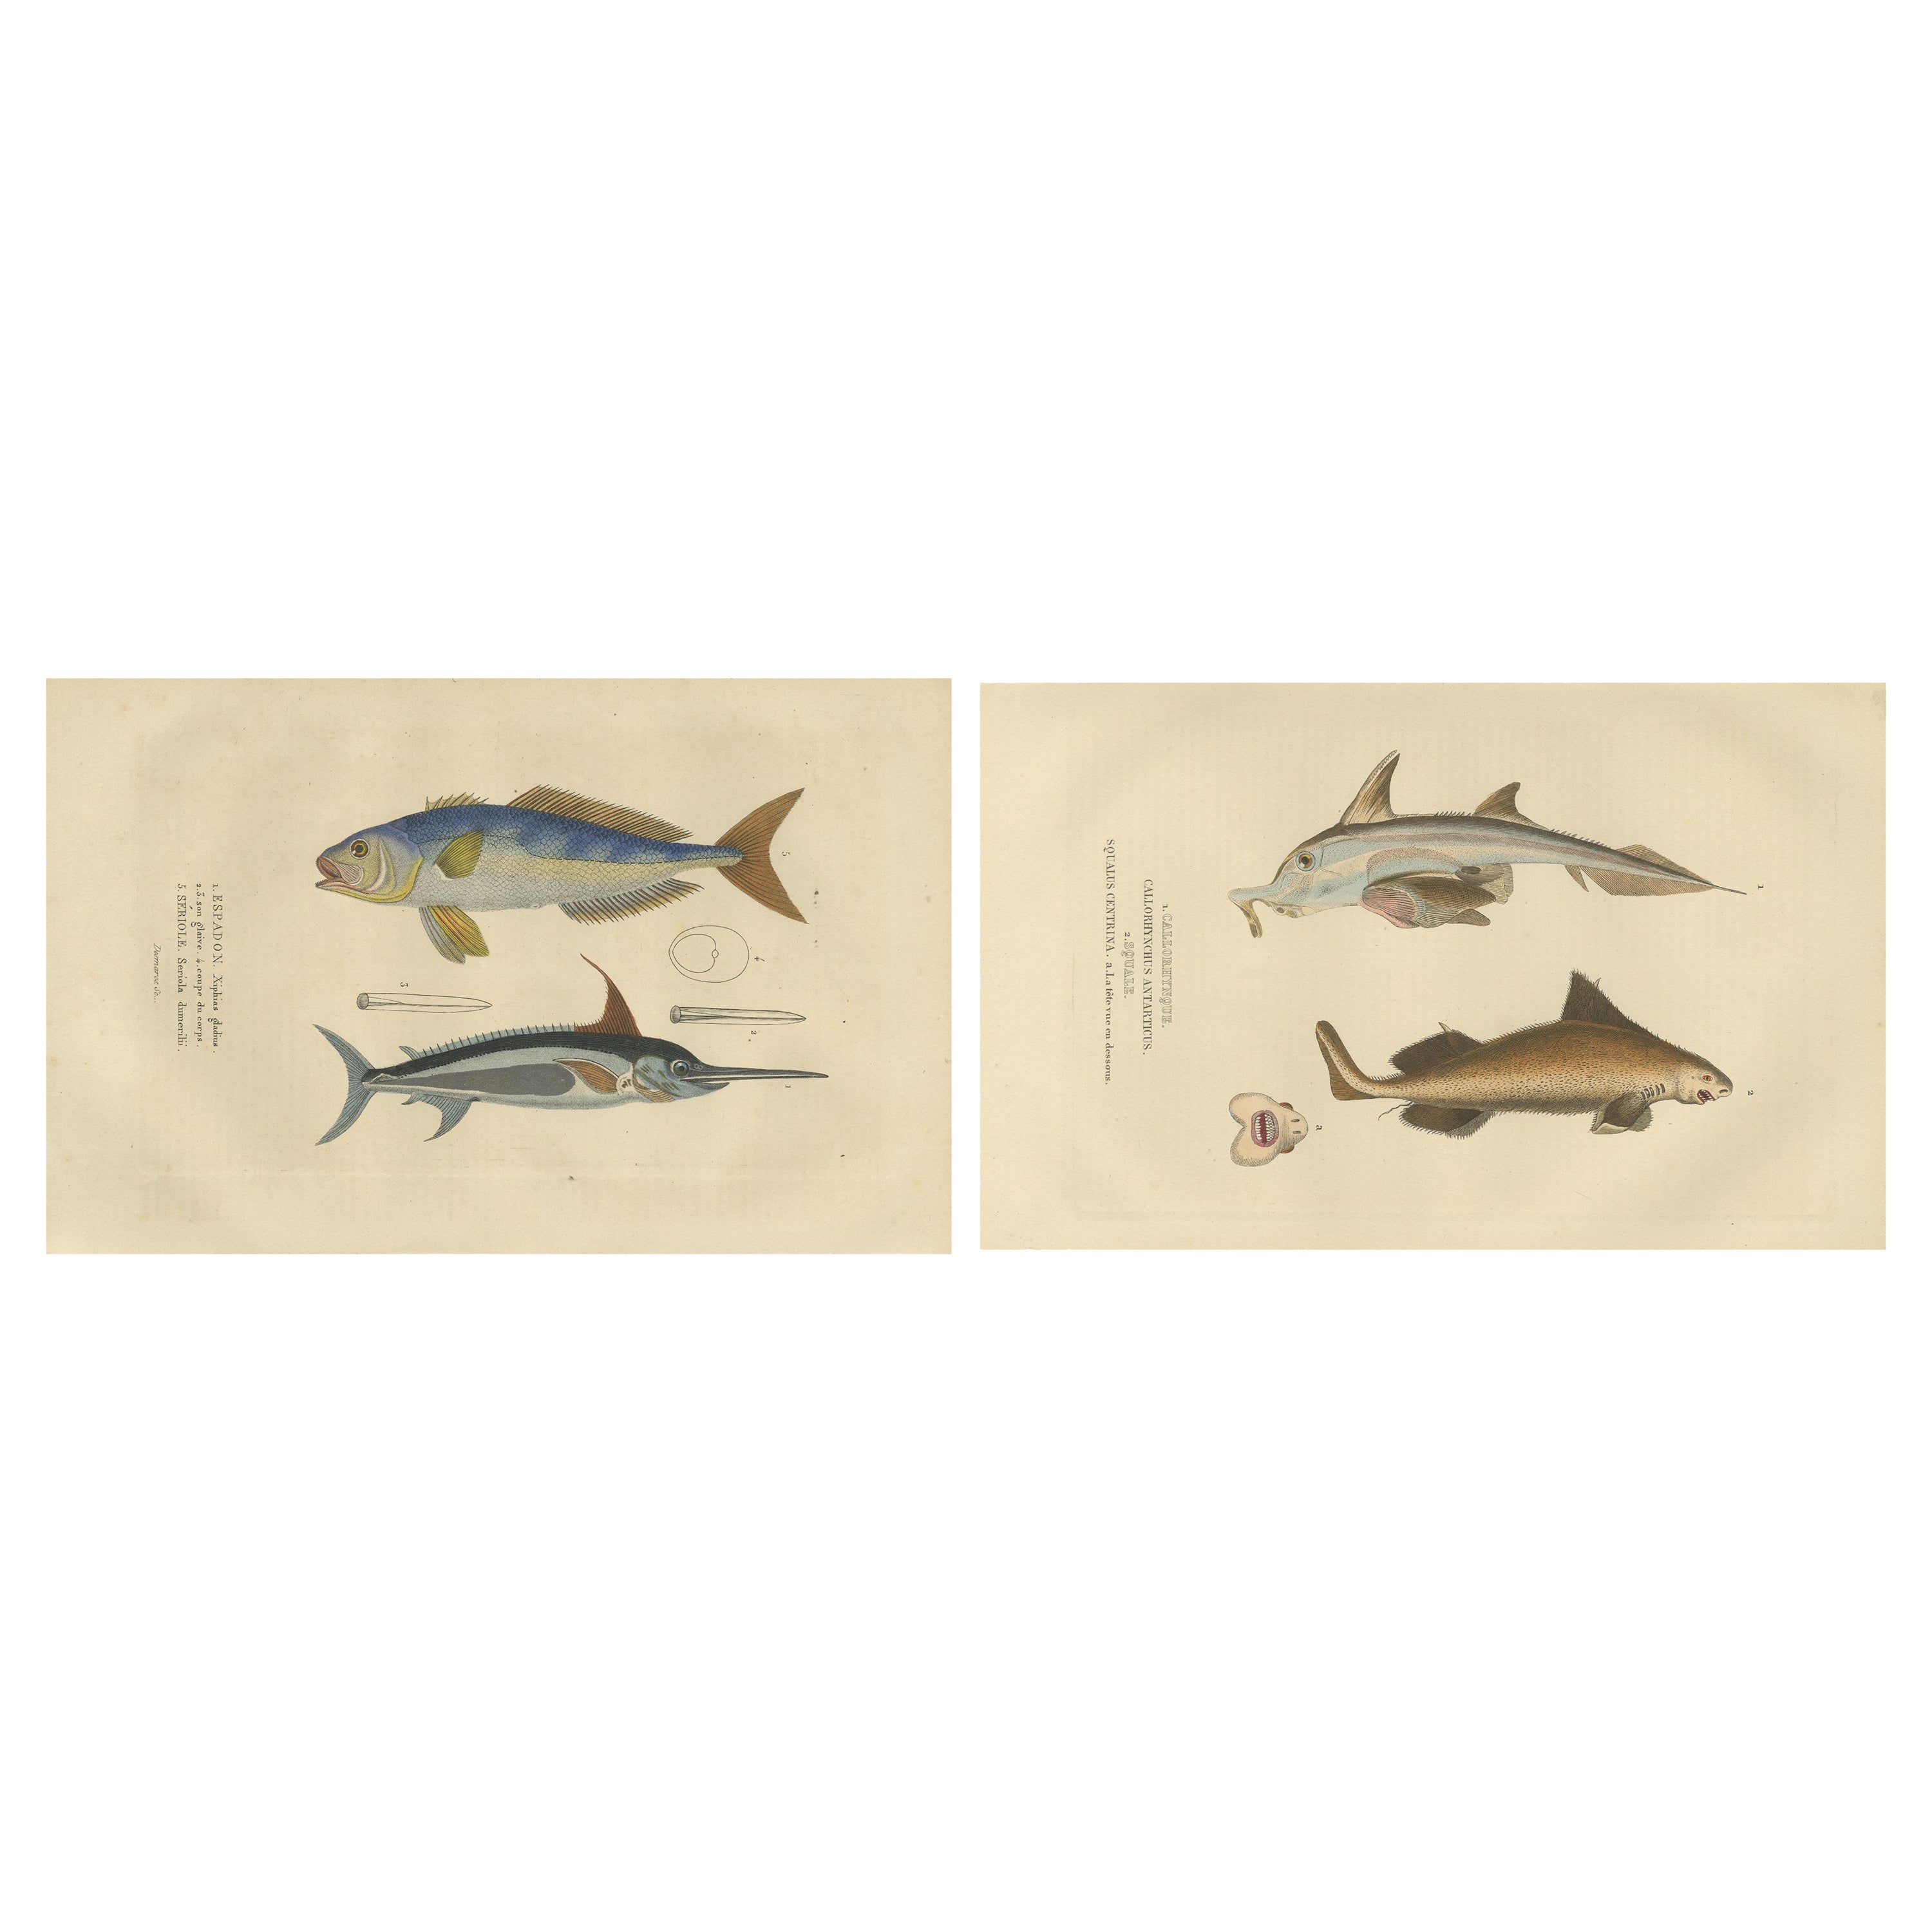 Marine Majesty: Swordfish & Sealife Engravings in Old Handcoloring, 1845